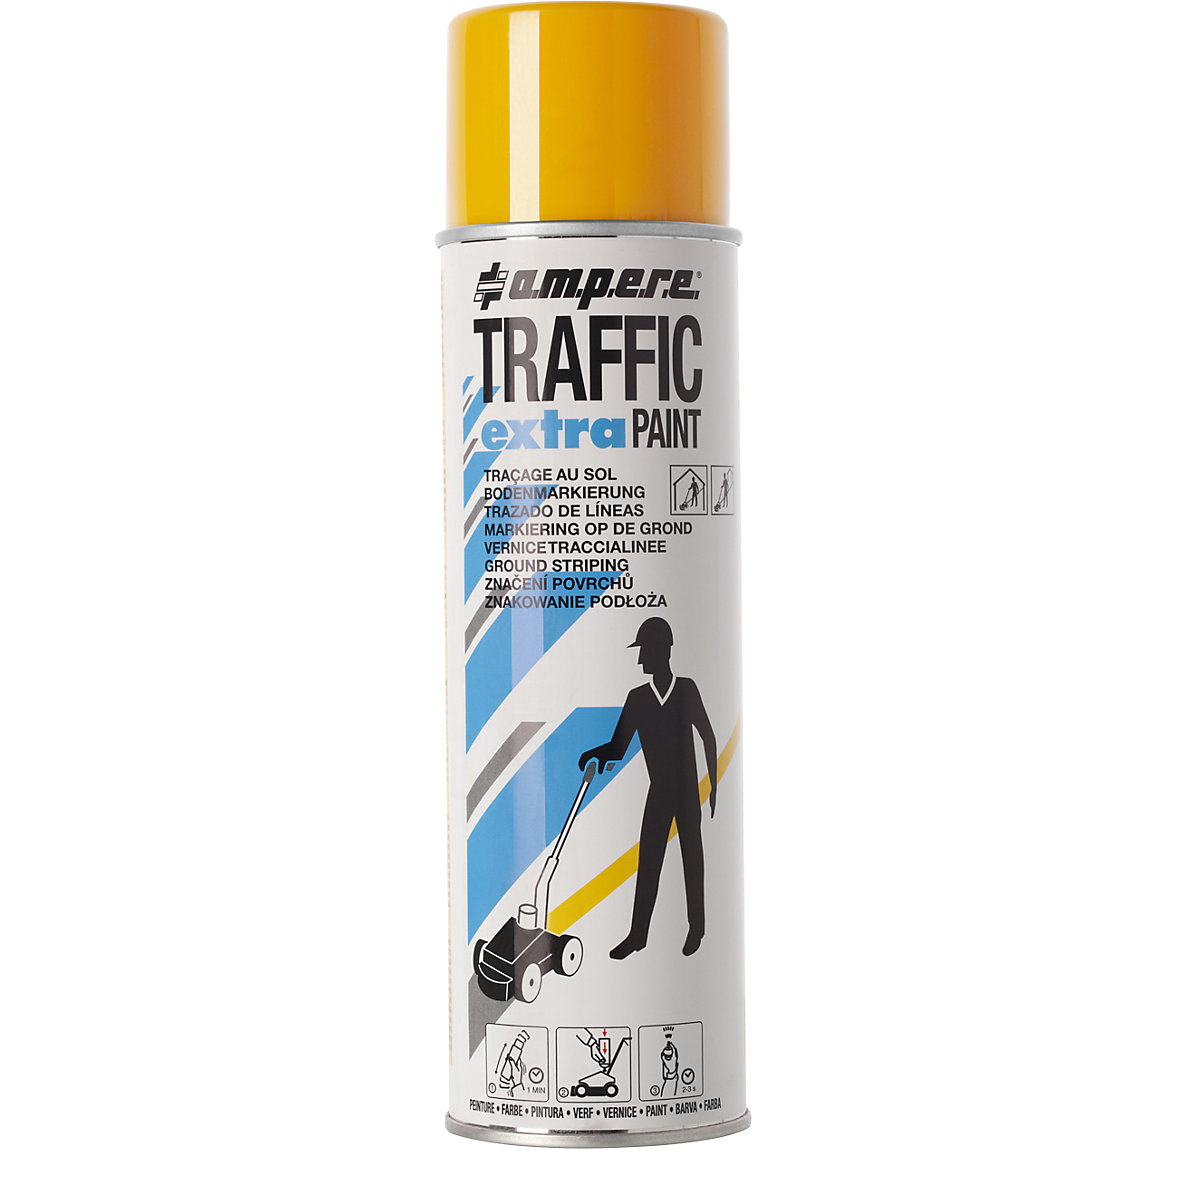 Vernice traccialinee Traffic extra Paint® per impieghi intensi – Ampere